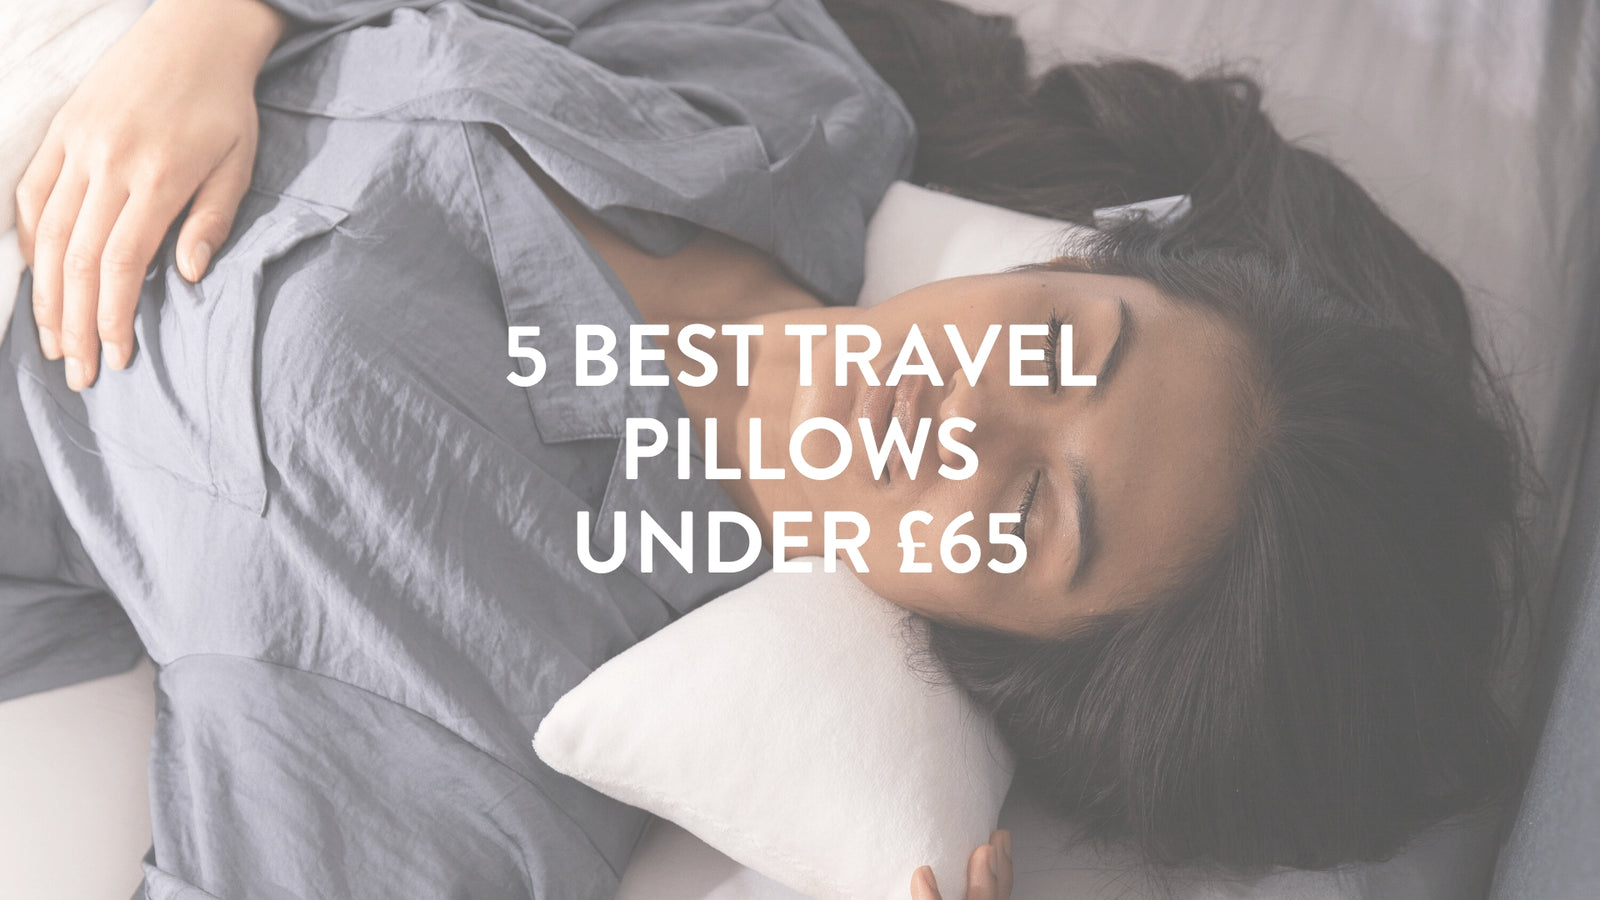 5 best travel pillows under £65 Putnams